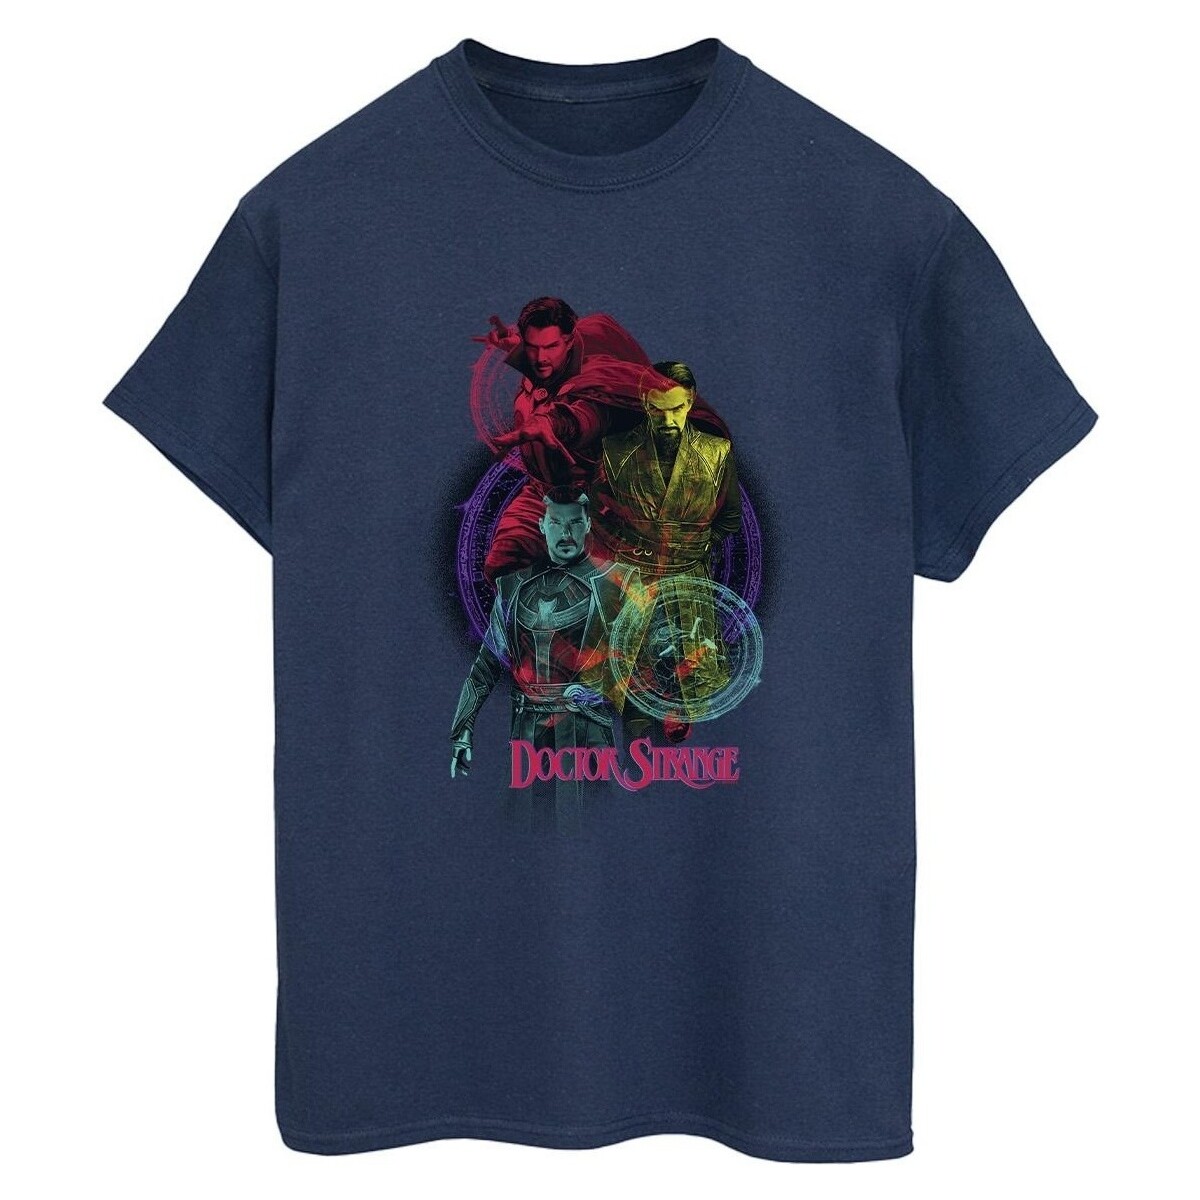 Vêtements Femme T-shirts manches longues Marvel Doctor Strange Rainbow Bleu